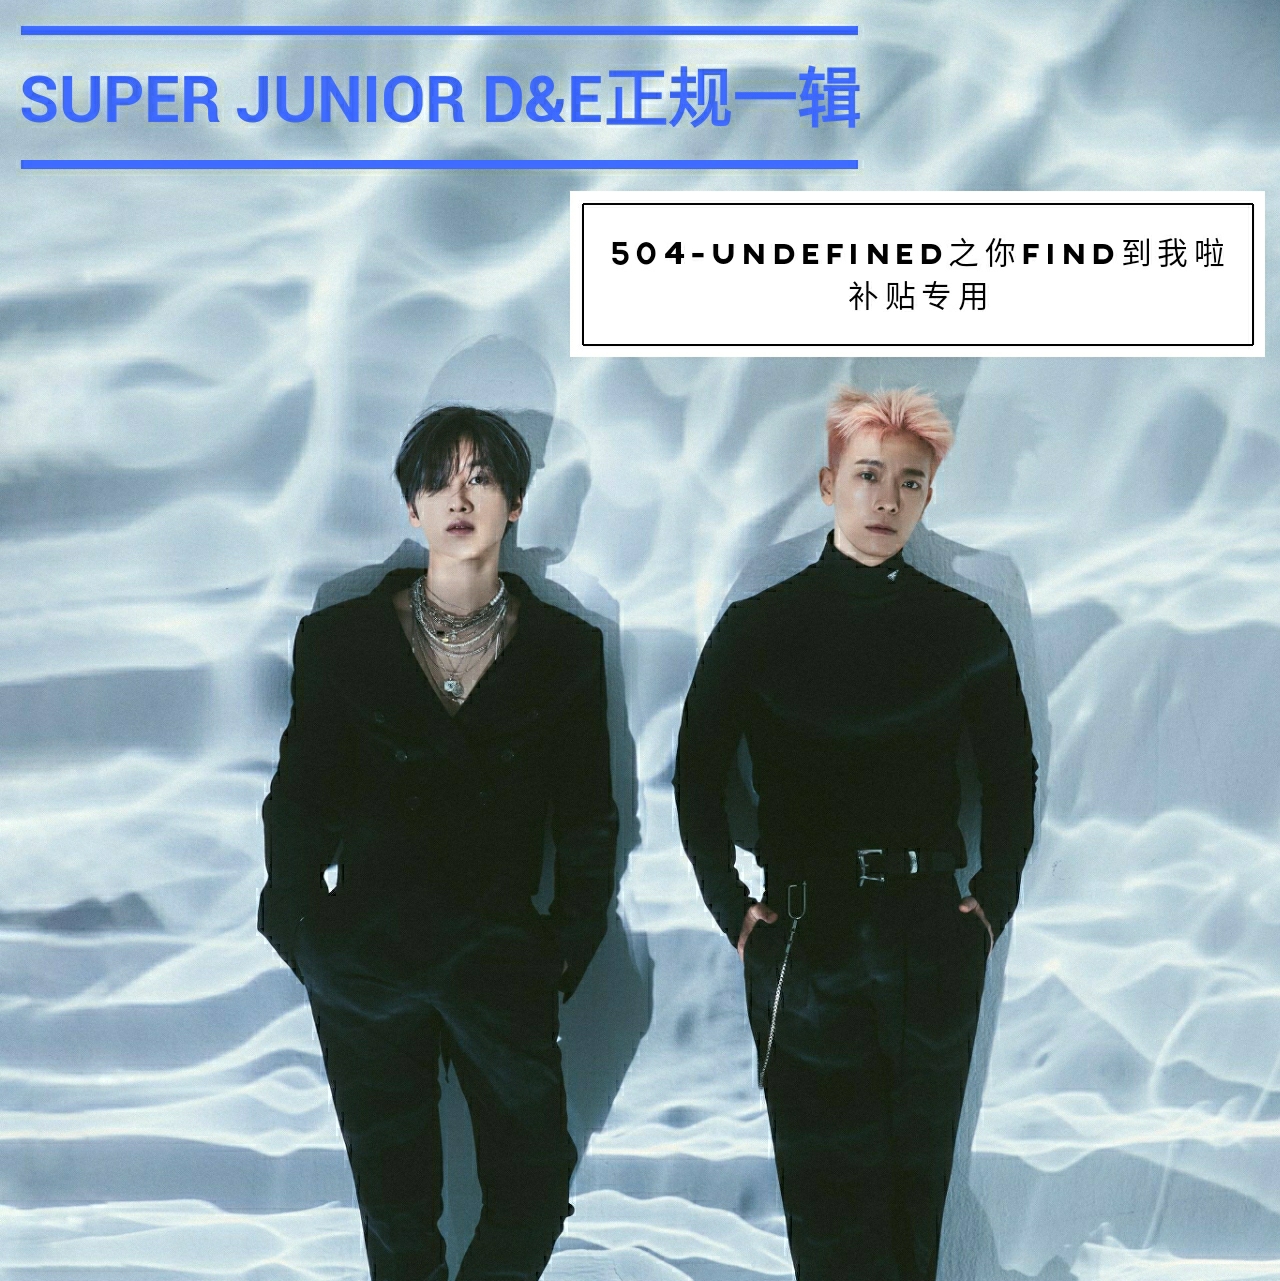 [全款 限量600张 补贴专] Super Junior : D&E - Album Vol.1 [COUNTDOWN] _504-undefined之你find到我